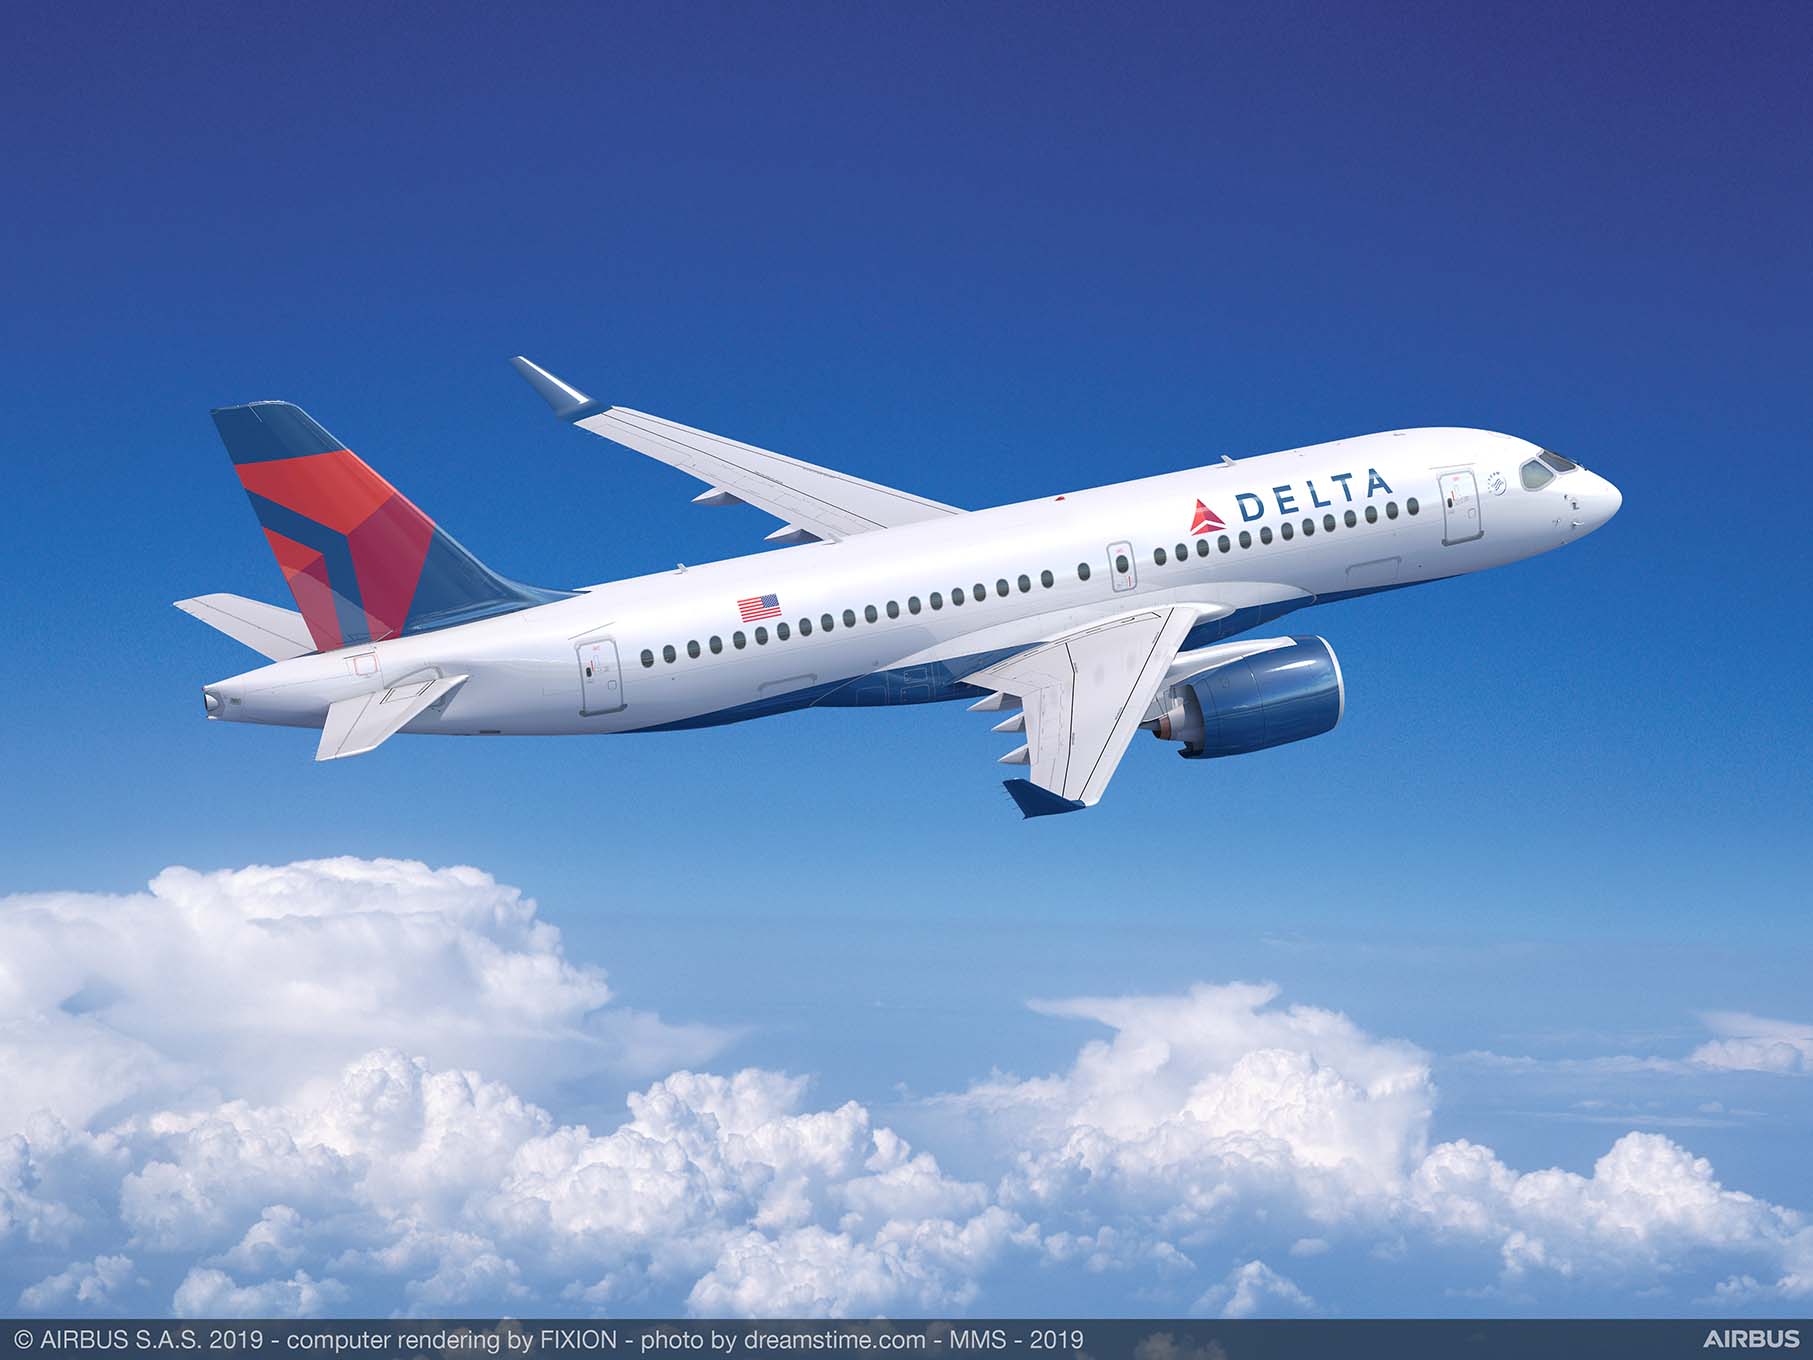 US DOT approves Delta, Air France, KLM and Virgin Atlantic joint venture